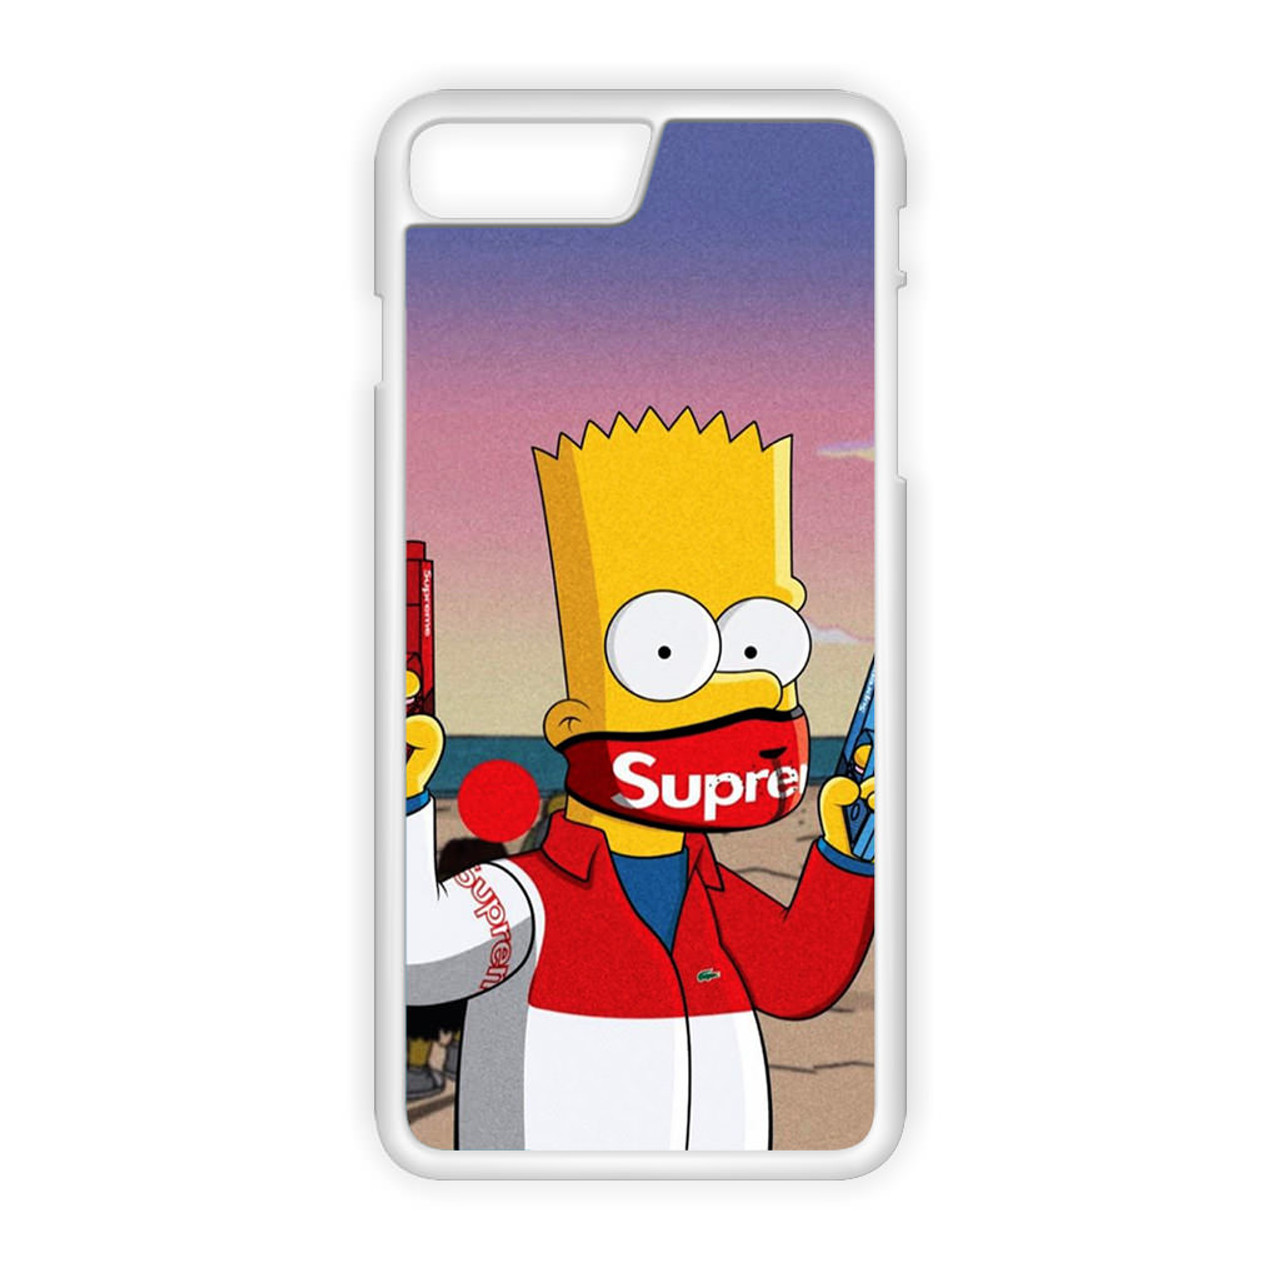 Bart Supreme Iphone 7 Plus Case Ggians